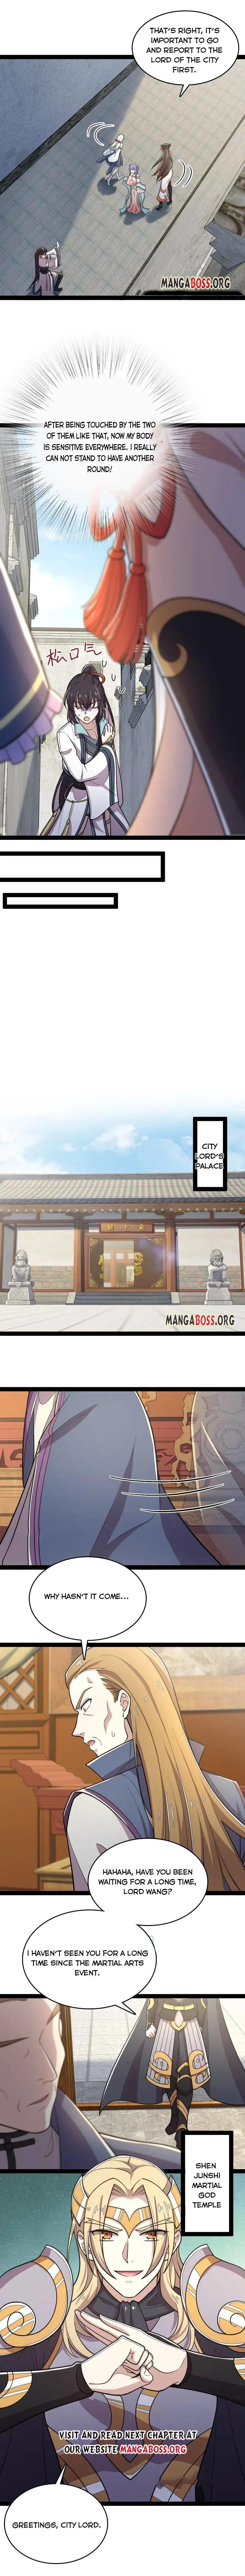 Life Of A War Emperor After Retirement Chapter 63 page 2 - Mangakakalots.com